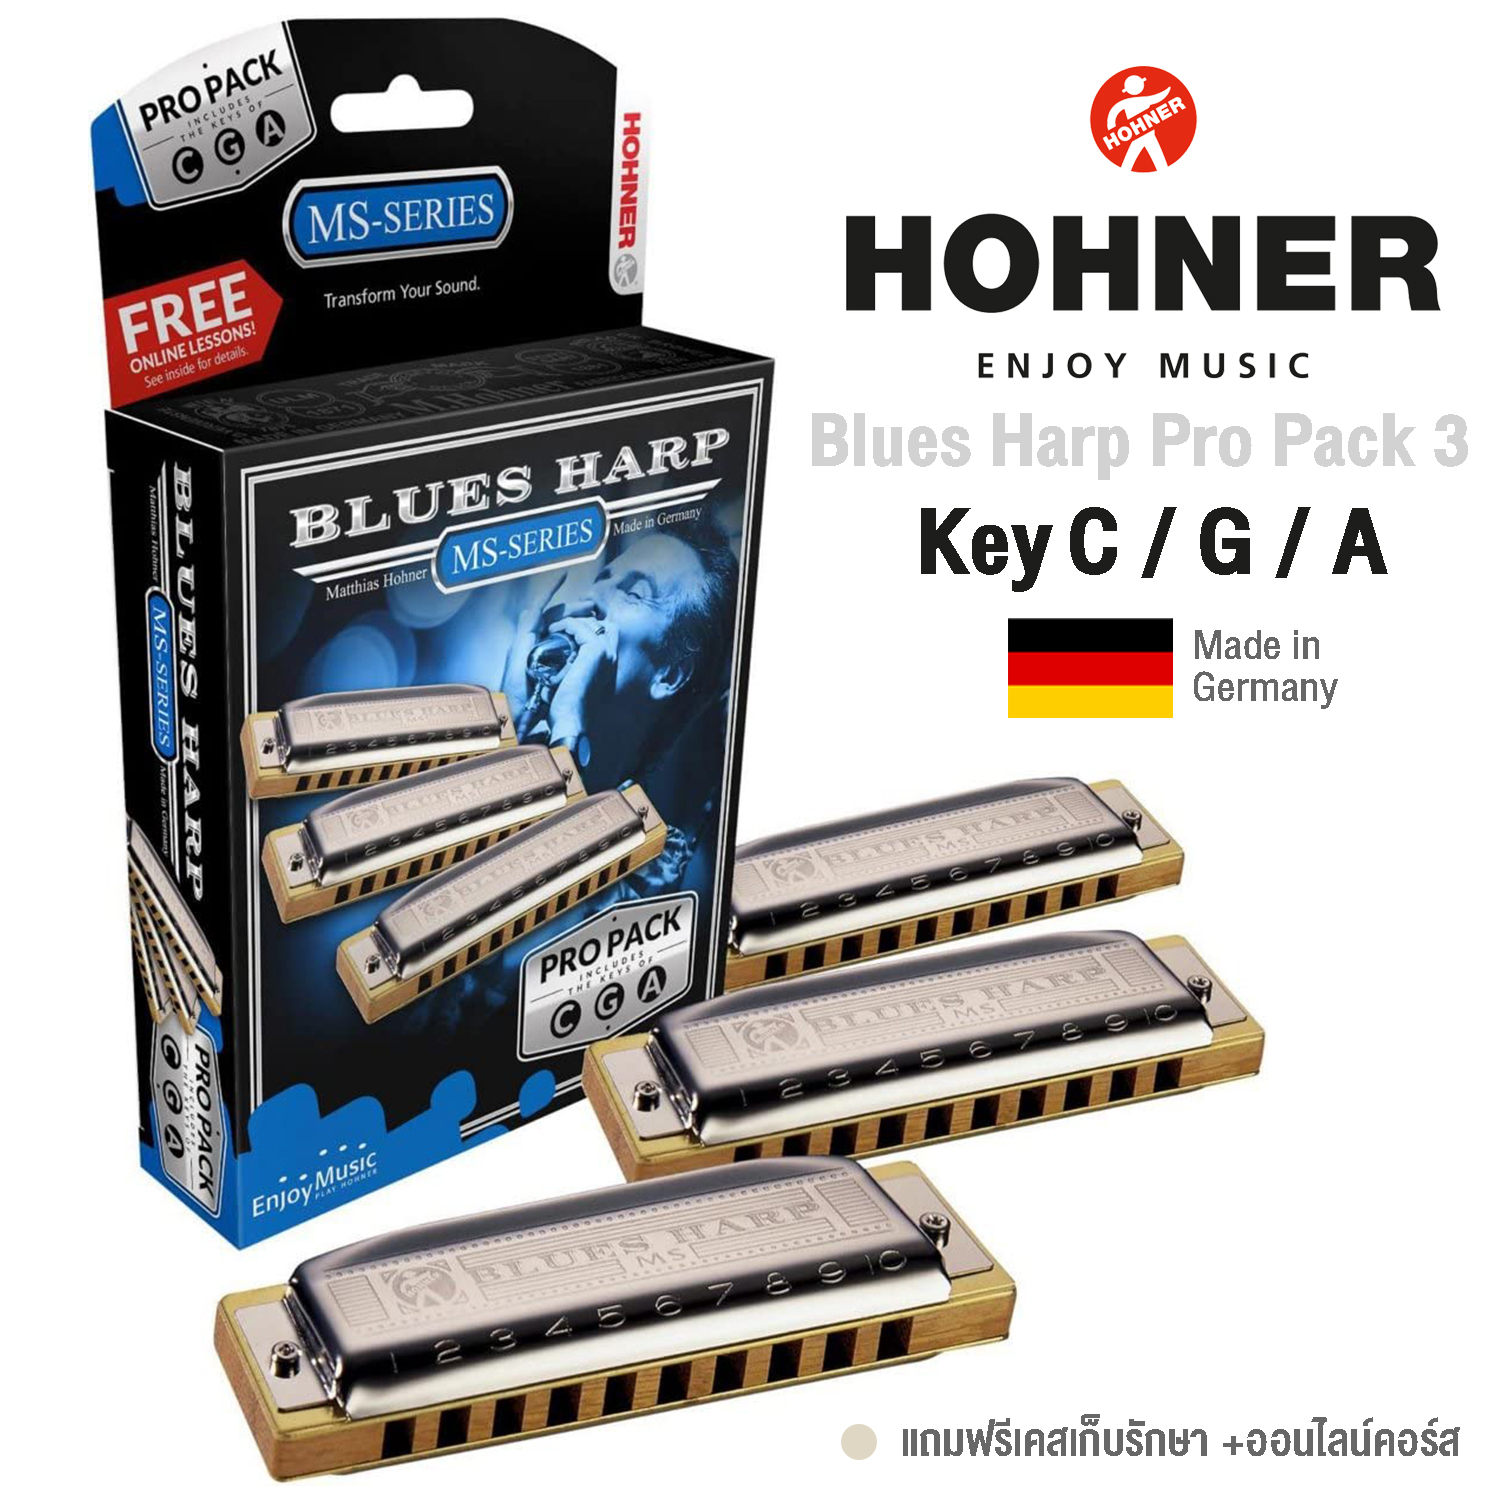 Hohner® Blues Harp Pro Pack 3 ฮาร์โมนิก้า 10 ช่อง แพ็ค 3 ตัว ชุดสุดคุ้ม คีย์ C / G / A ซีรี่ย์ MS-Series + แถมฟรีเคส & Online Course ** Made in Germany **